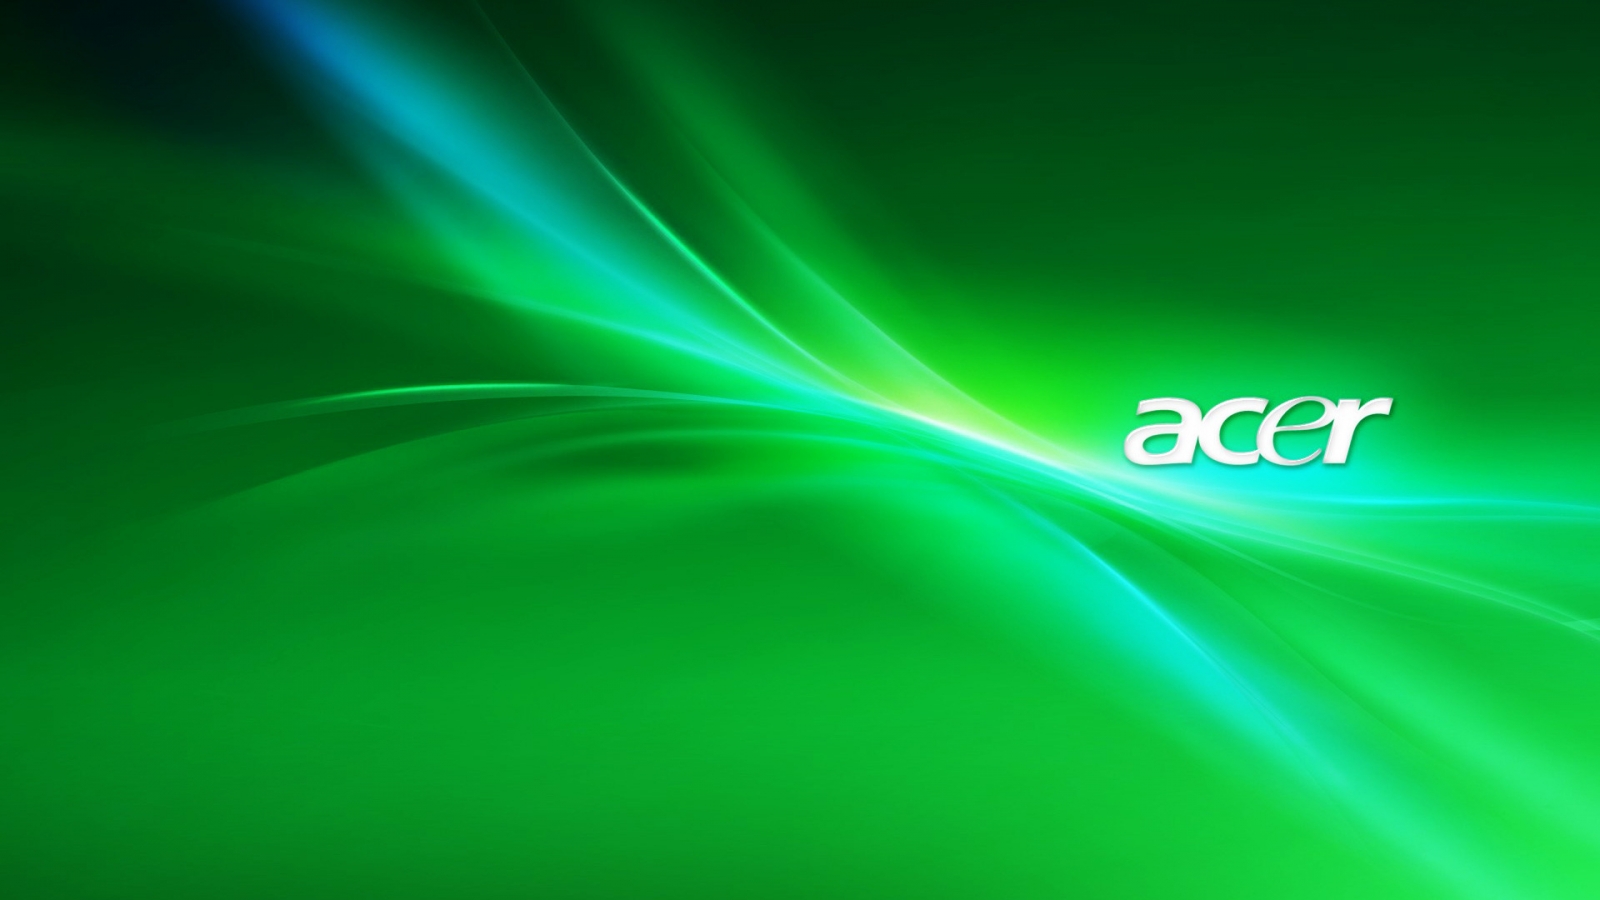 Acer Green for 1600 x 900 HDTV resolution